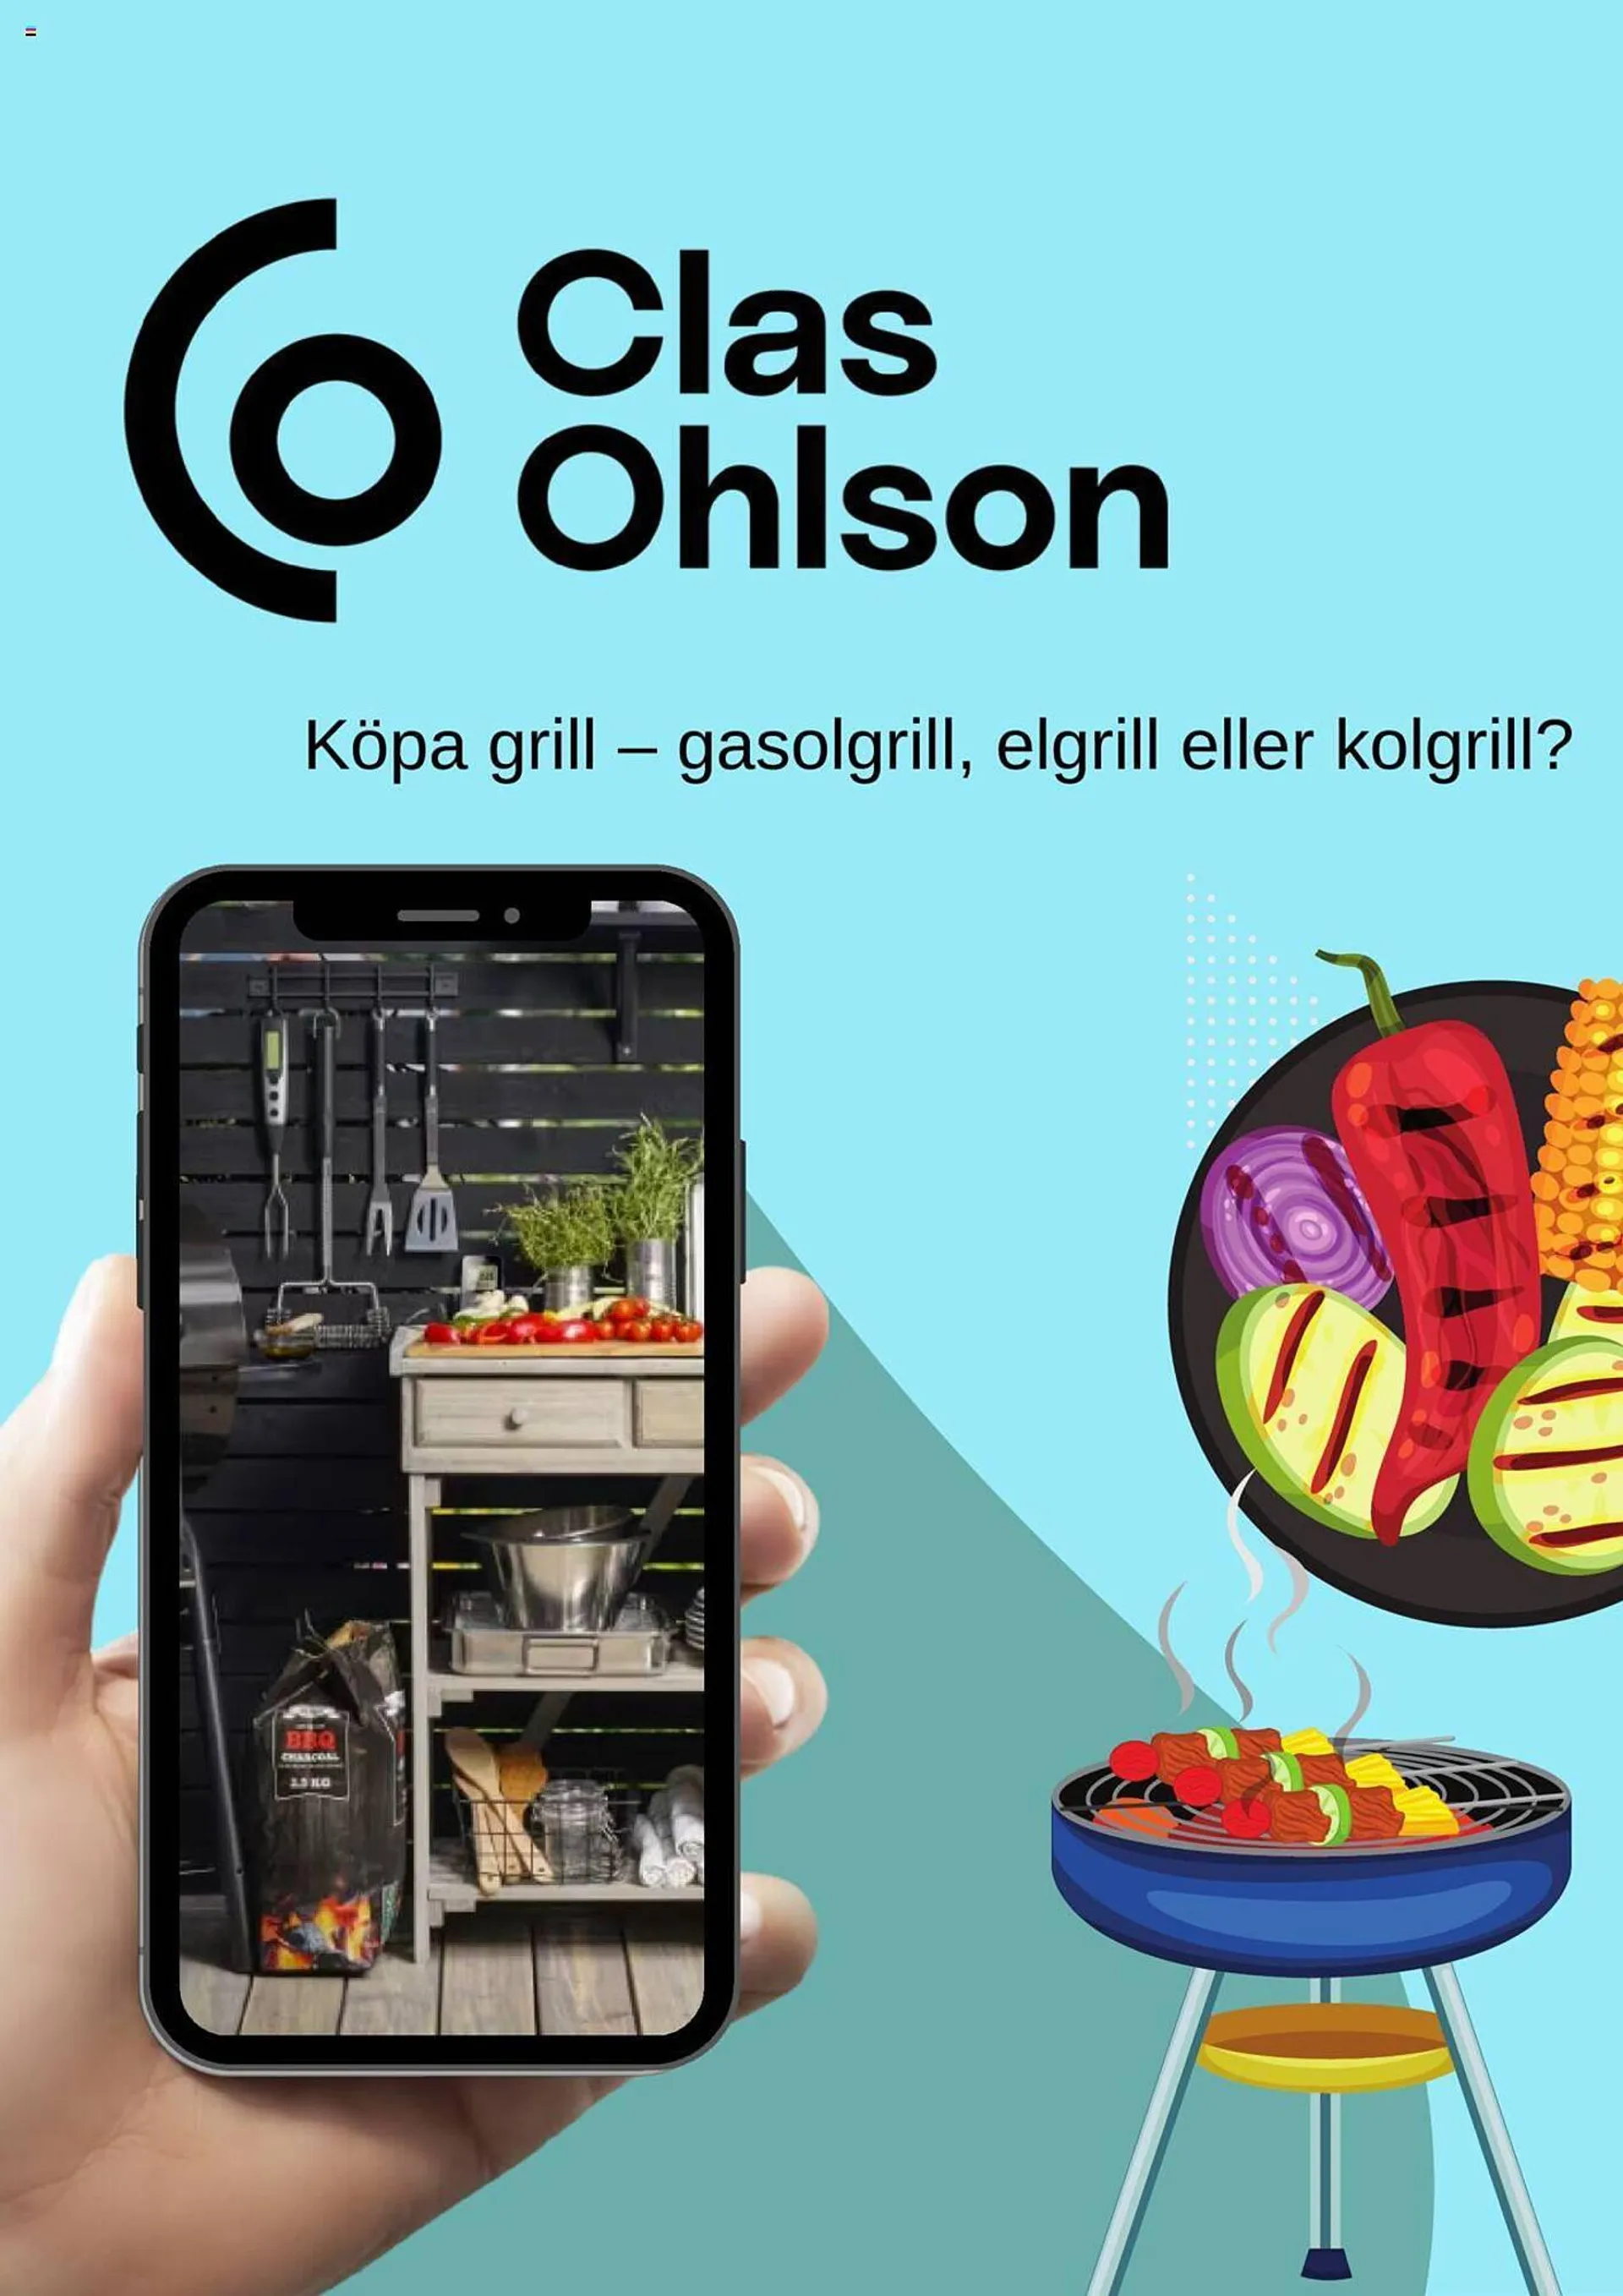 Clas Ohlson reklamblad - 1